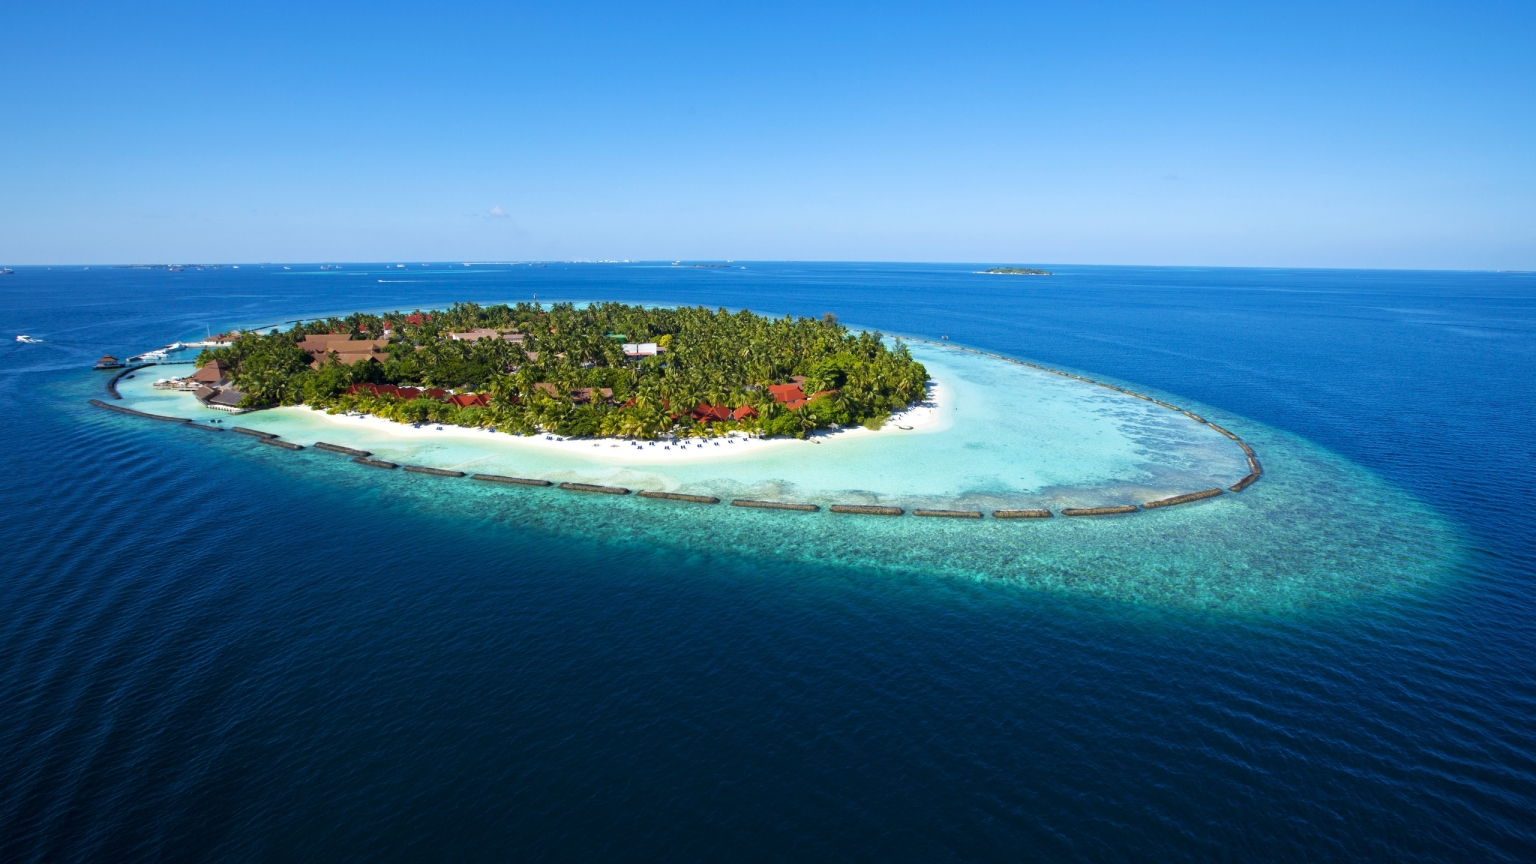 Amazing Maldives Island View for 1536 x 864 HDTV resolution